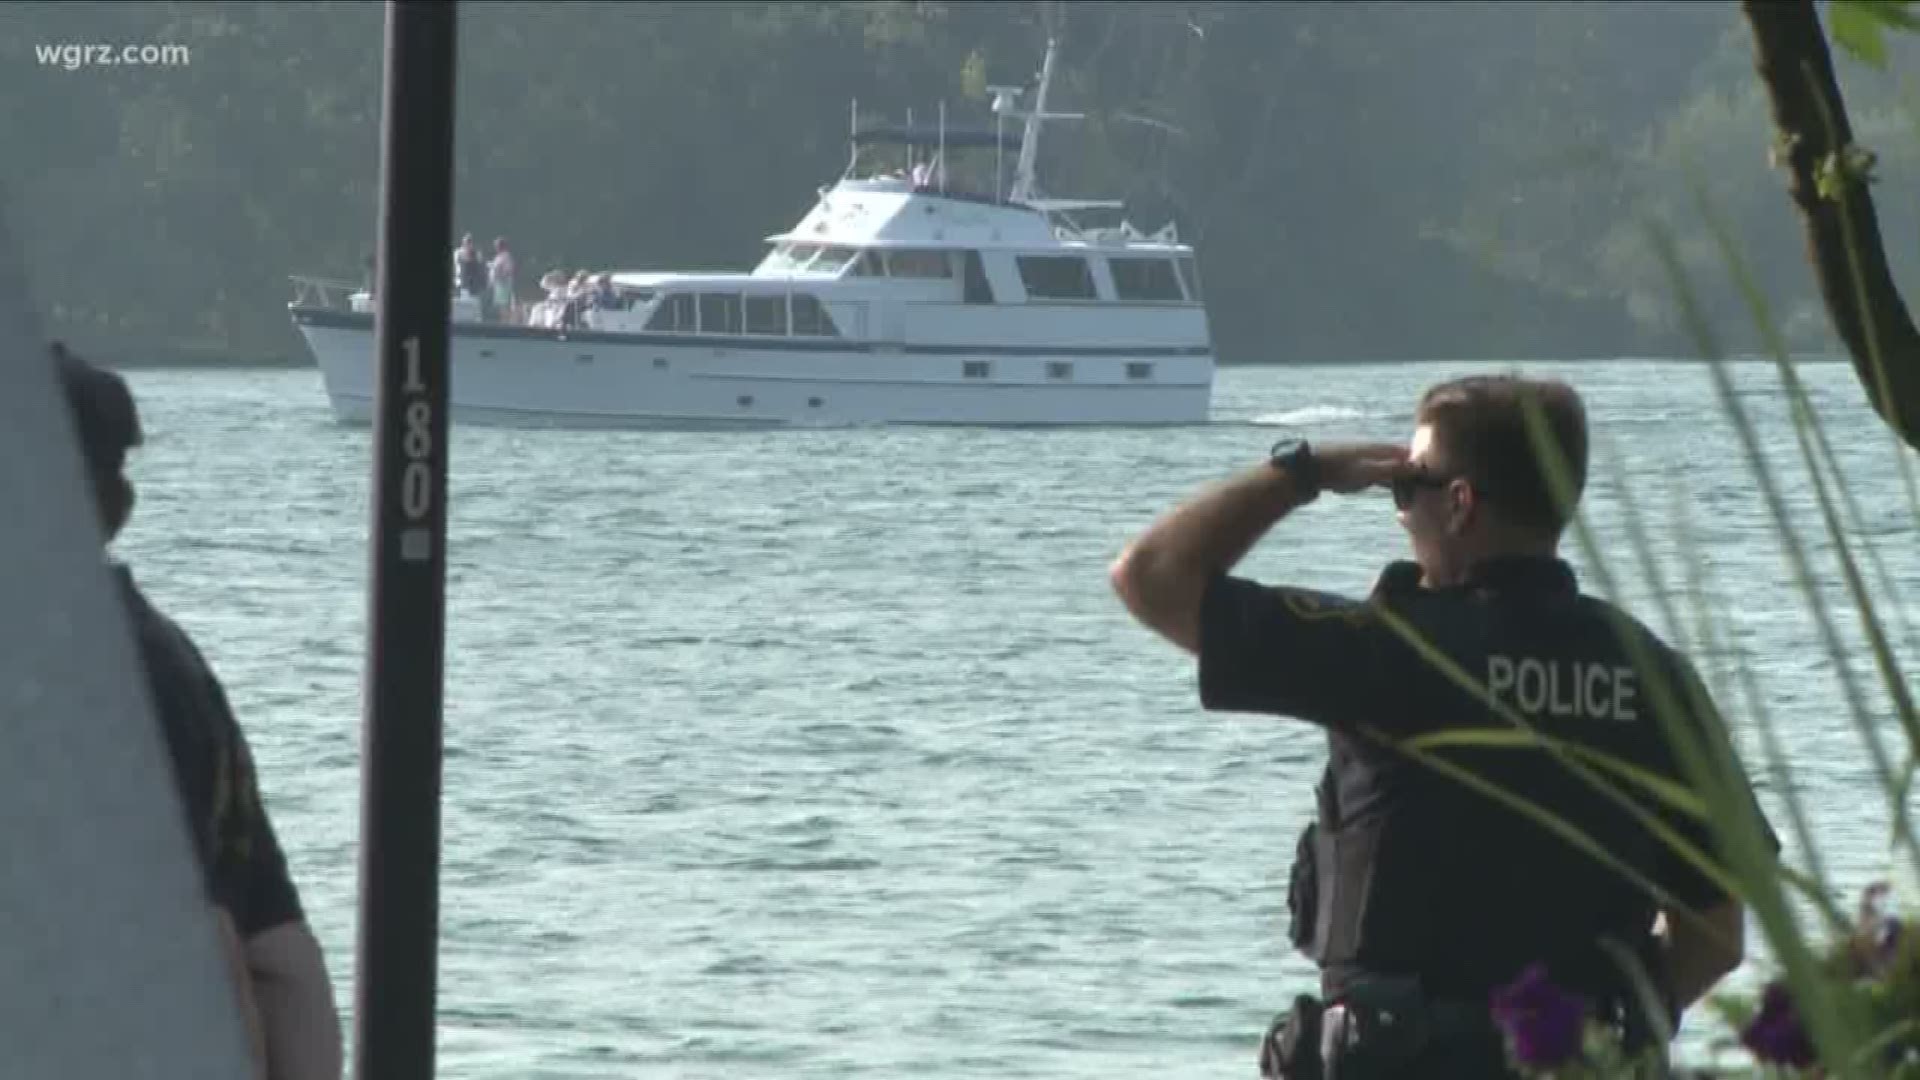 Police name jet skier in boat accident on Niagara River